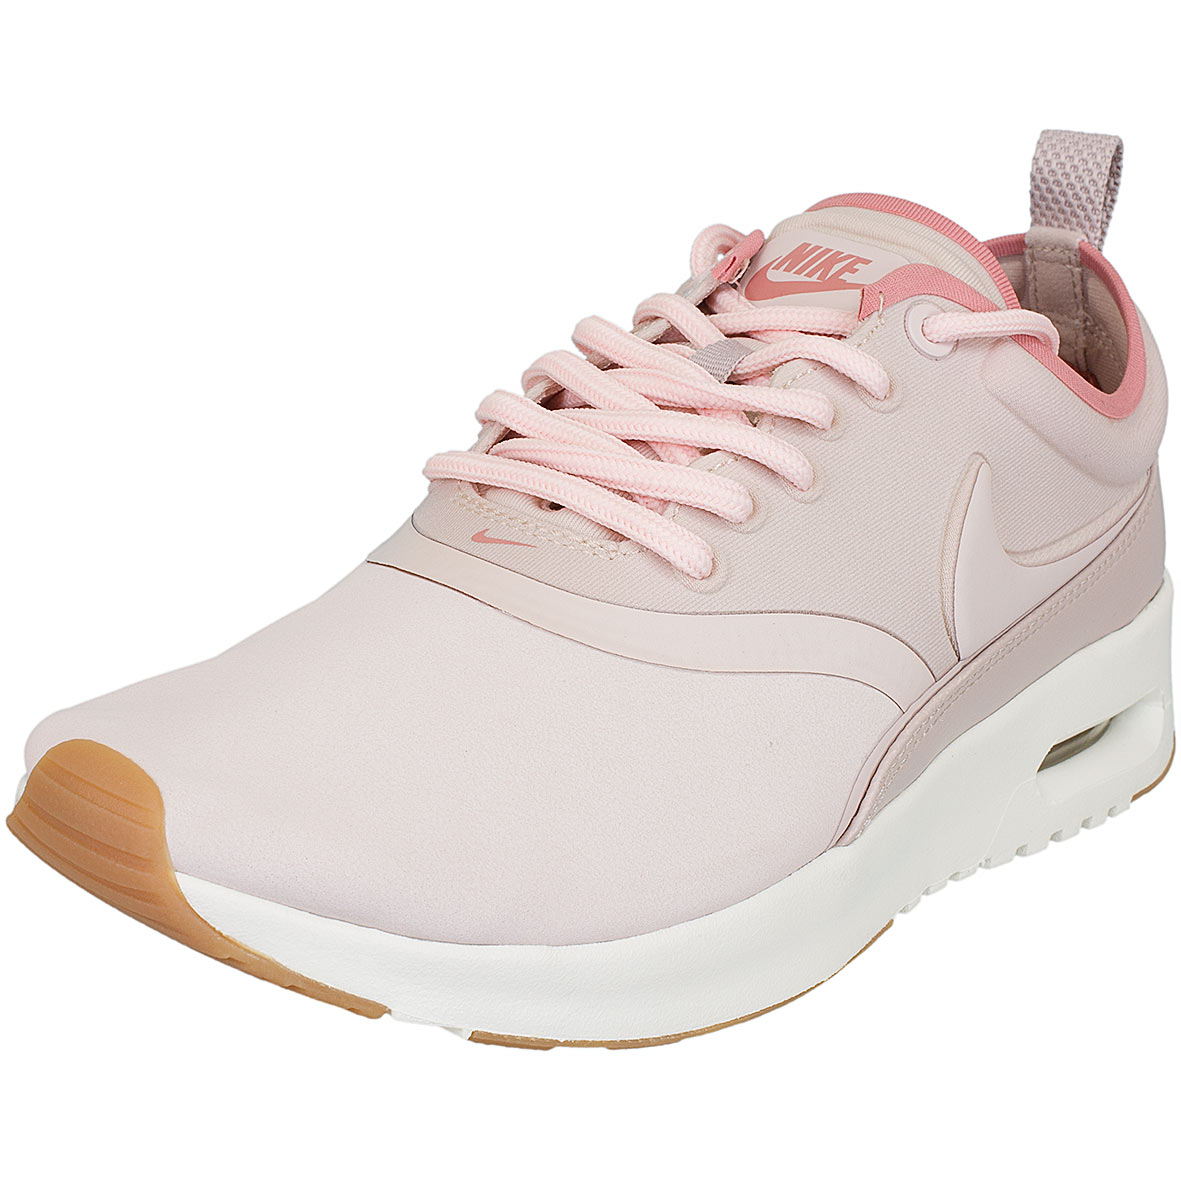 ☆ Nike Sneaker Air Max Thea Ultra Premium rosa - hier bestellen!